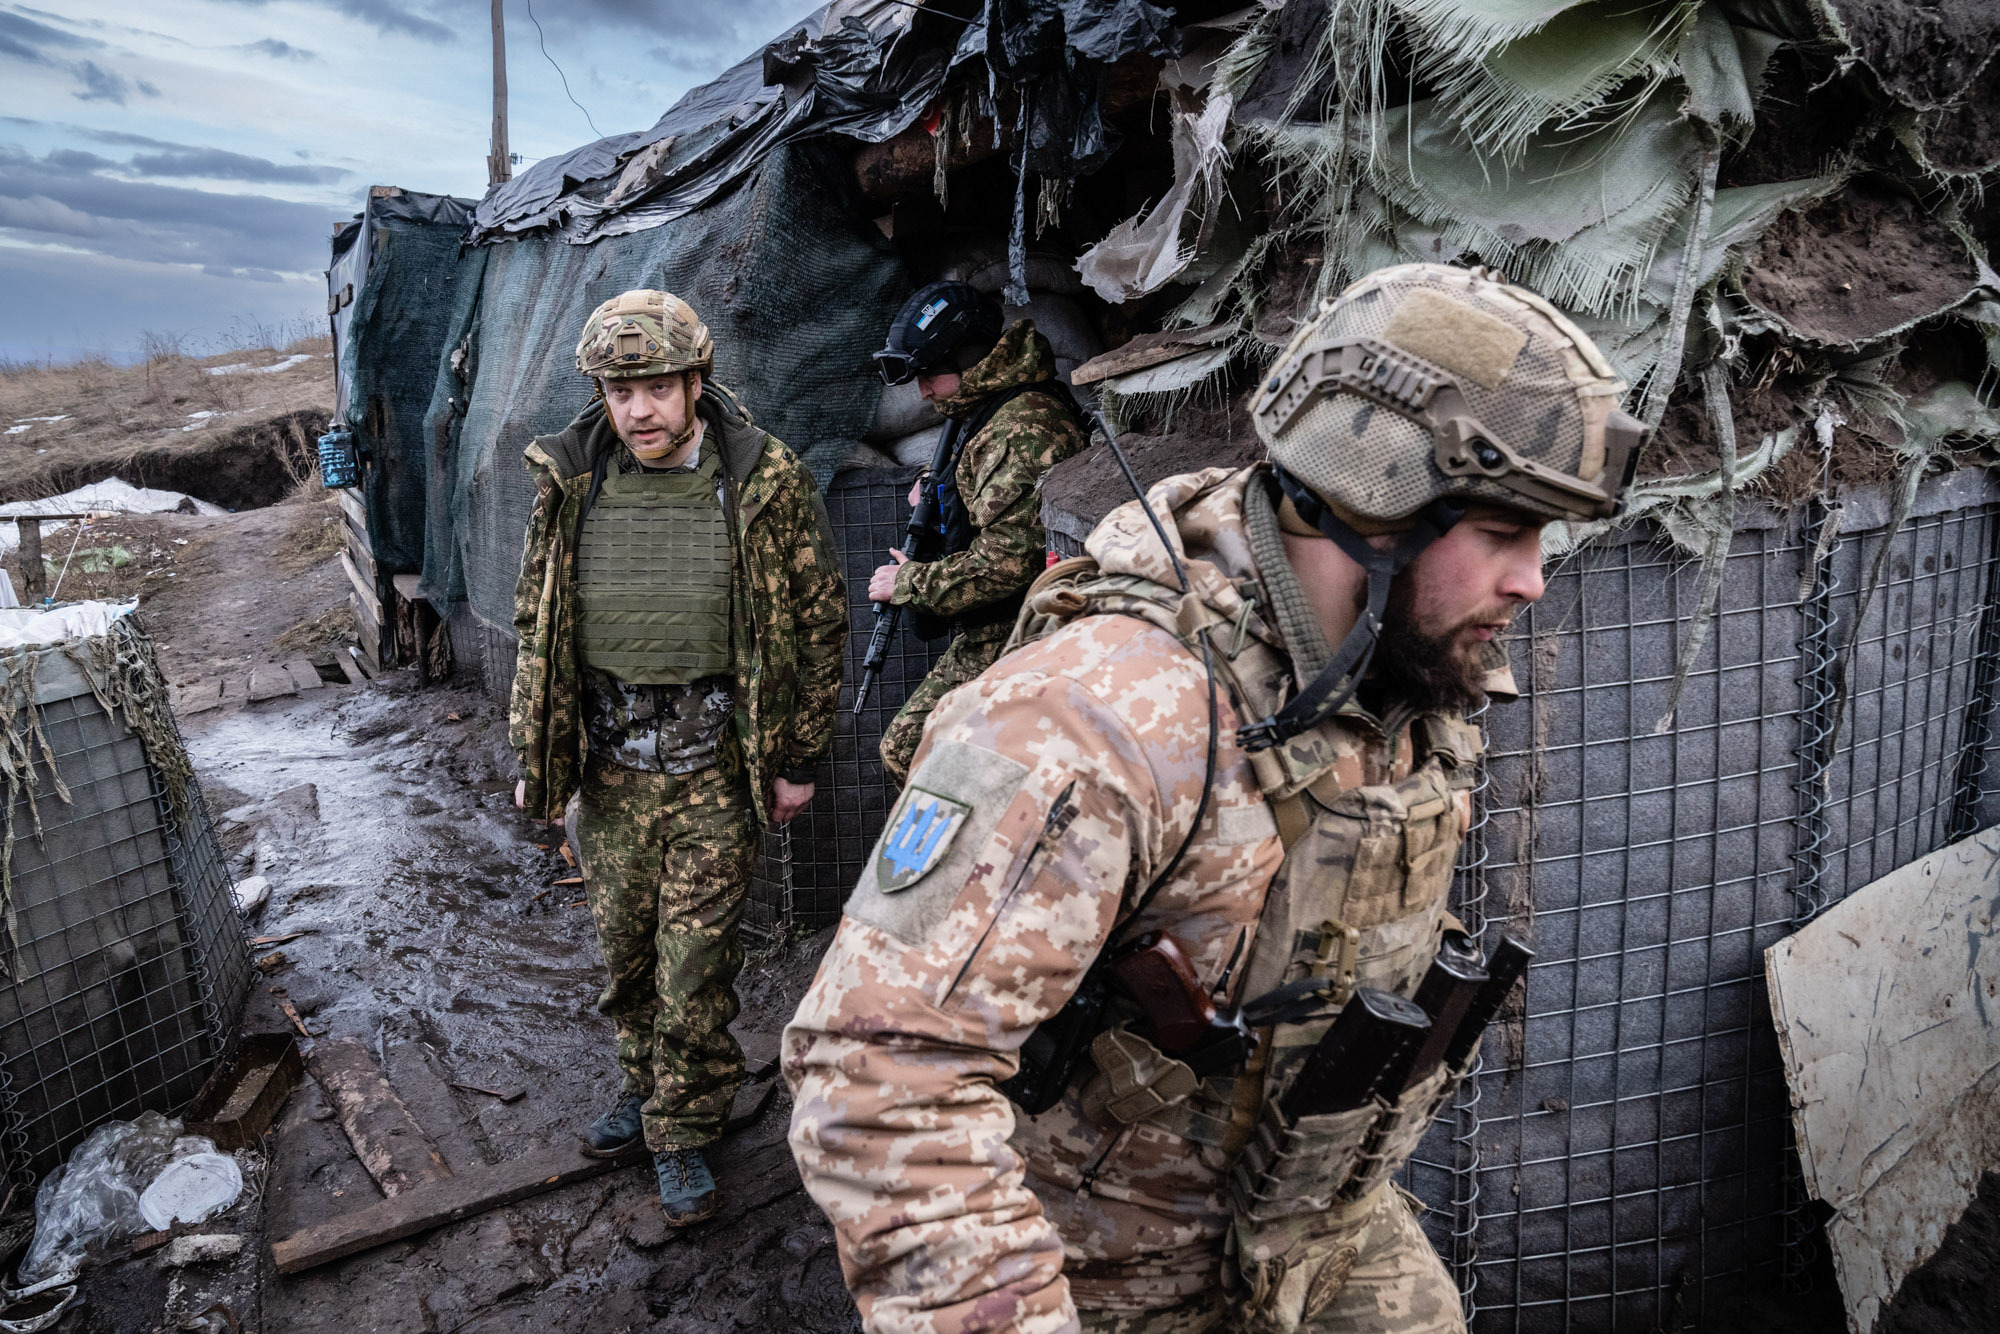 Ukraine's Interior Minister Denys Monastyrskiy, left, visits soldiers at a front line position in Novoluhanske, Ukraine, on February 19. (Timothy Fadek/Redux for CNN)